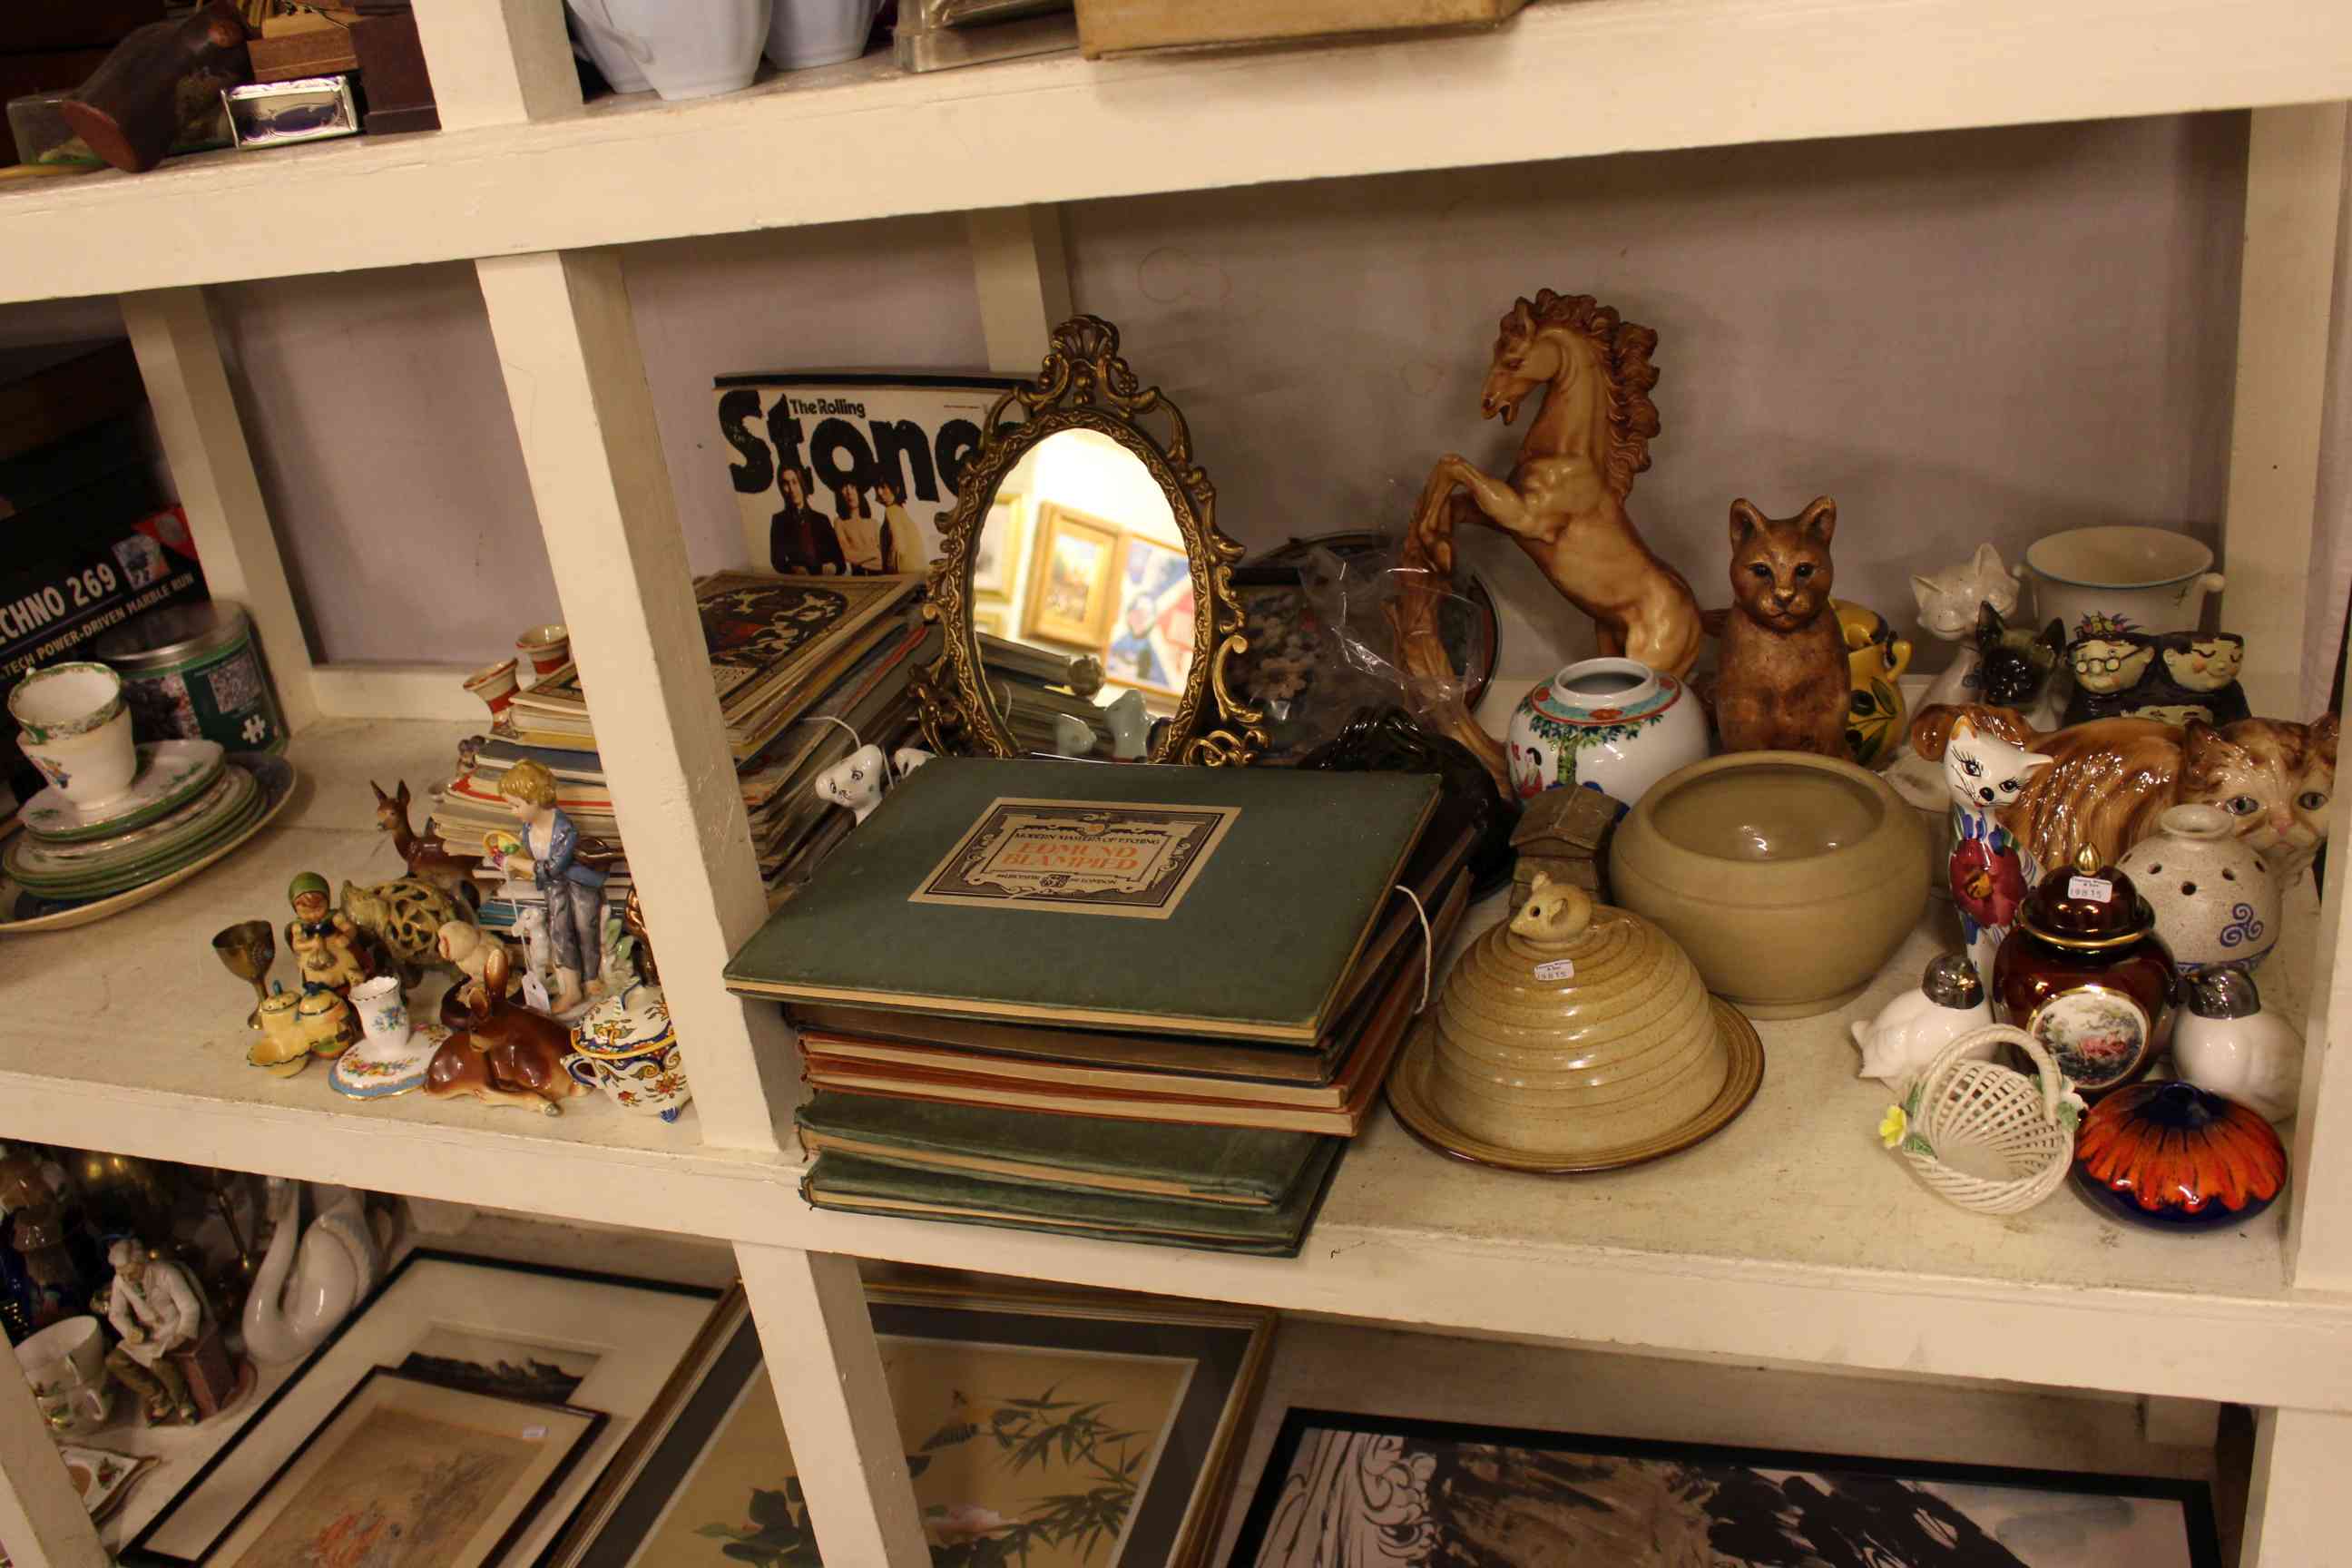 Shelf assortment including LP's, ceramics, punch, Edmund Blampied etchings, atlases, Royalty,